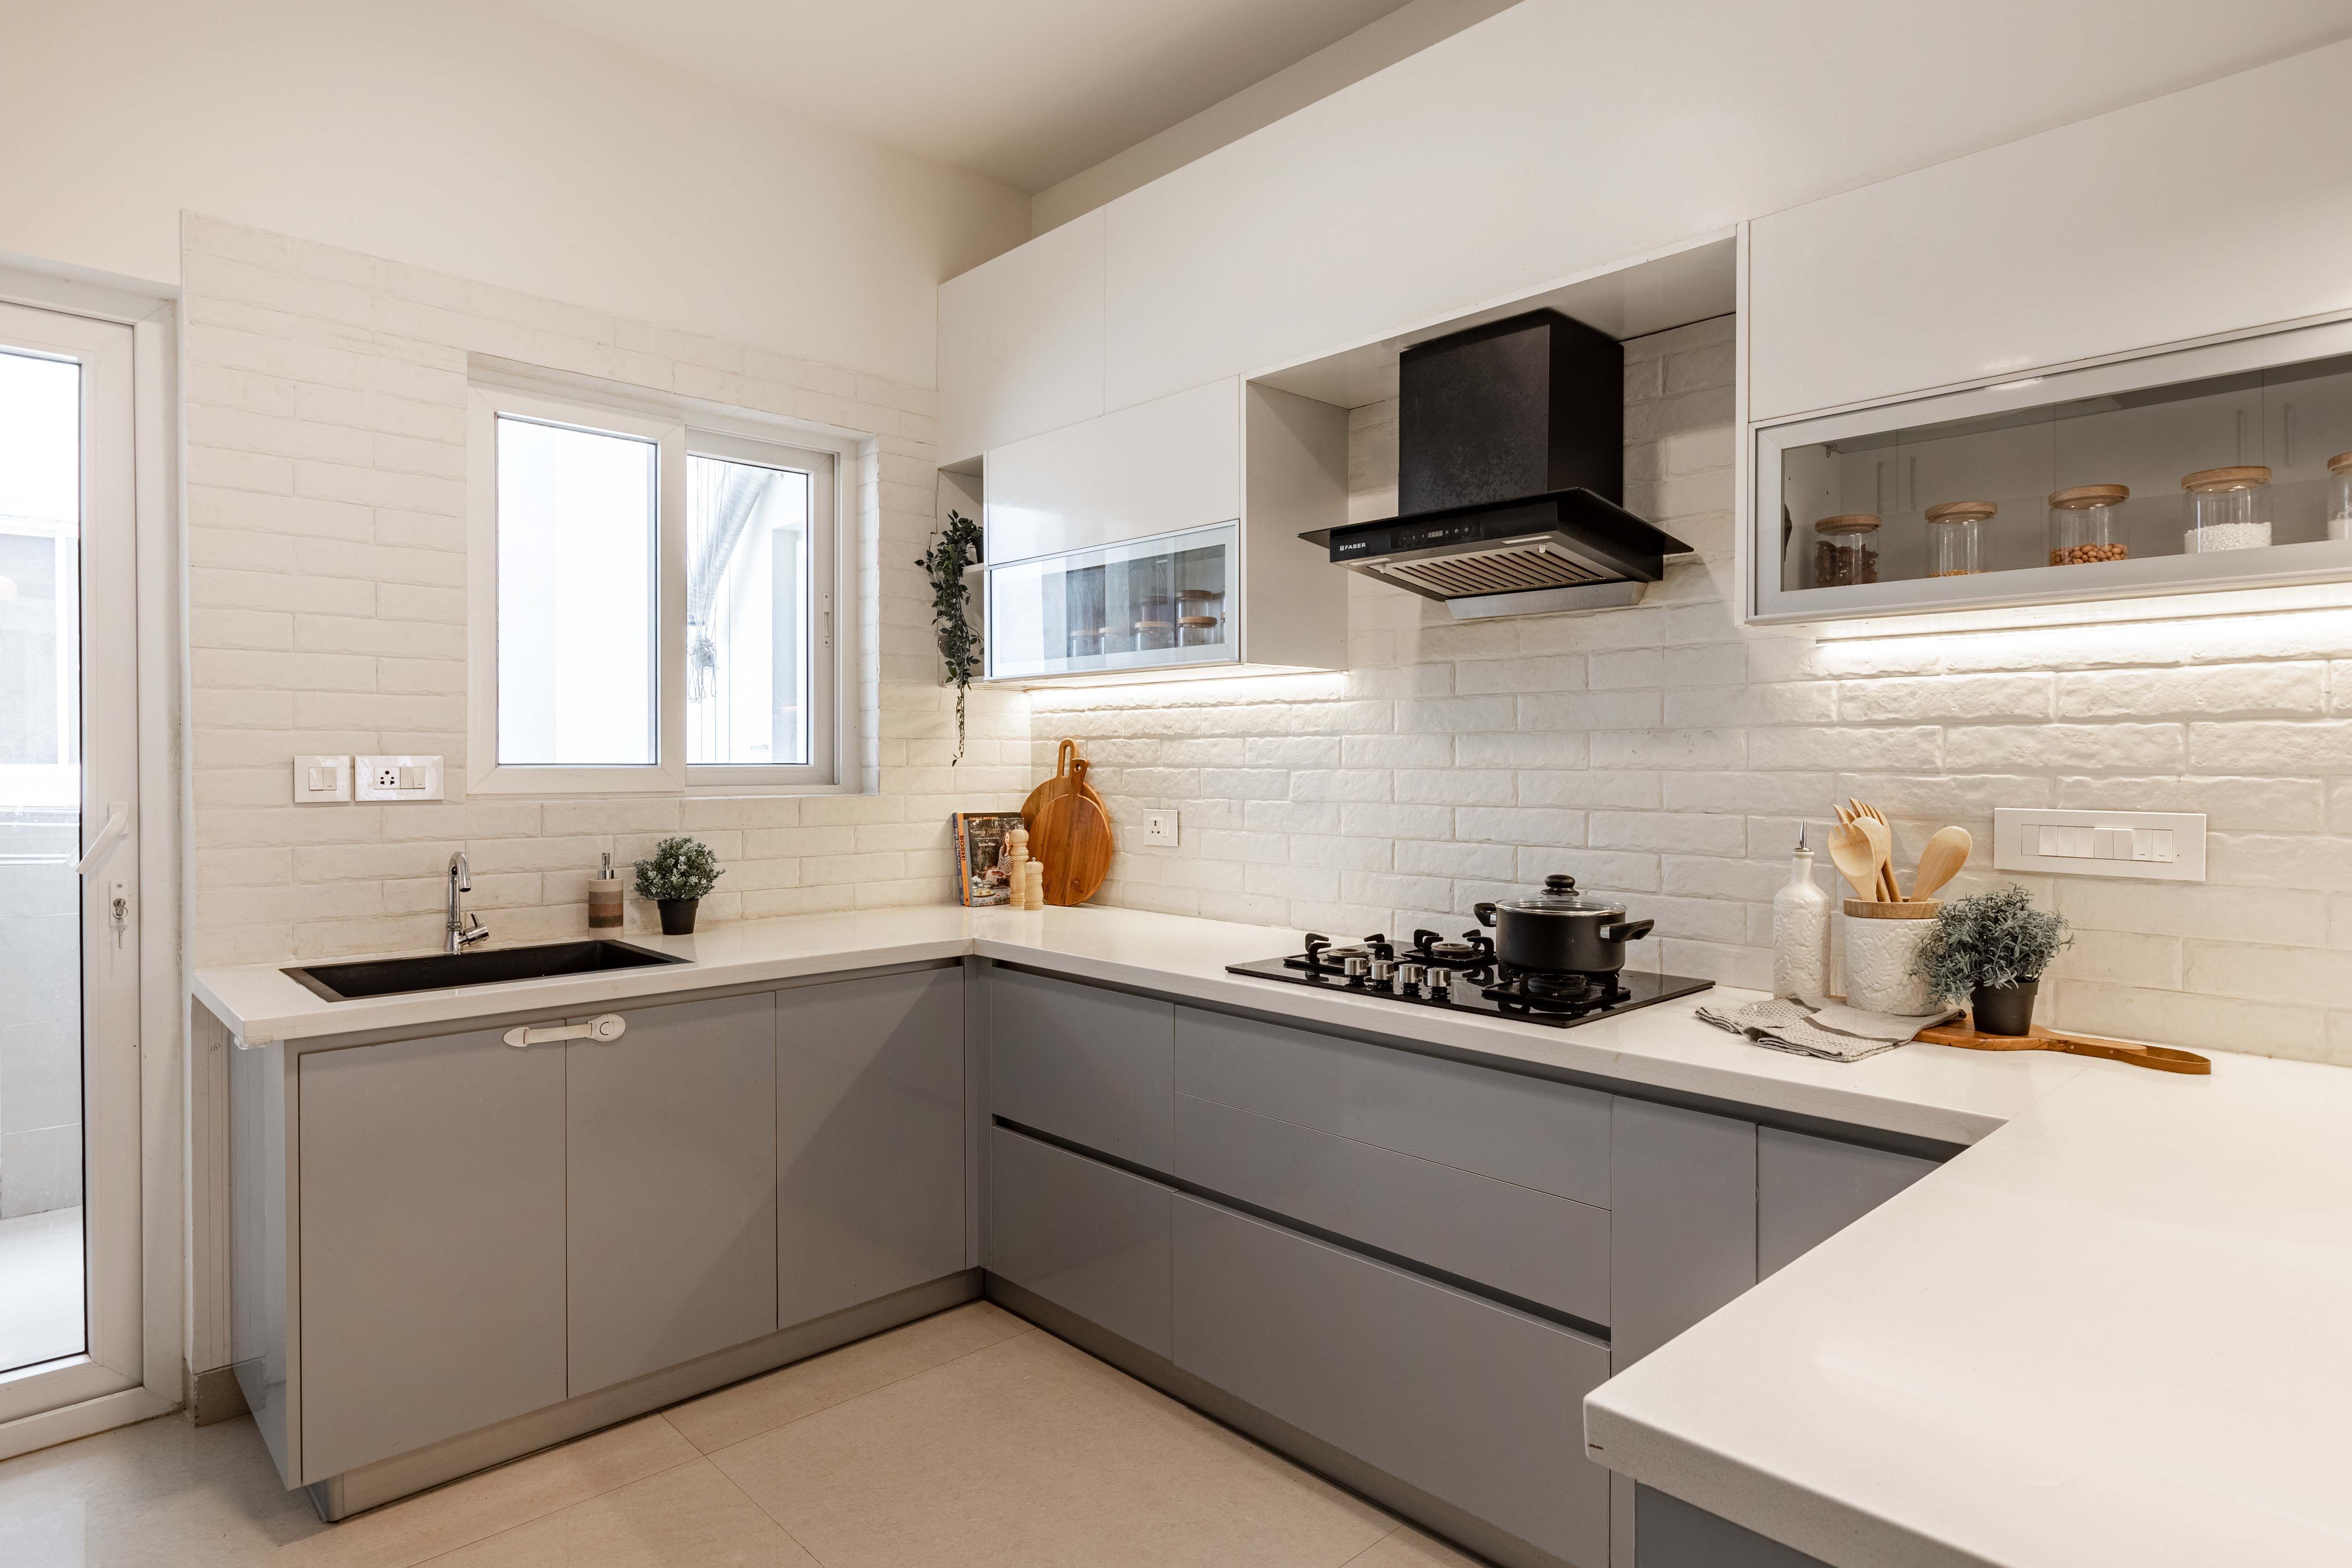 Modern Island Kitchen Design With Brick Backsplash Tiles